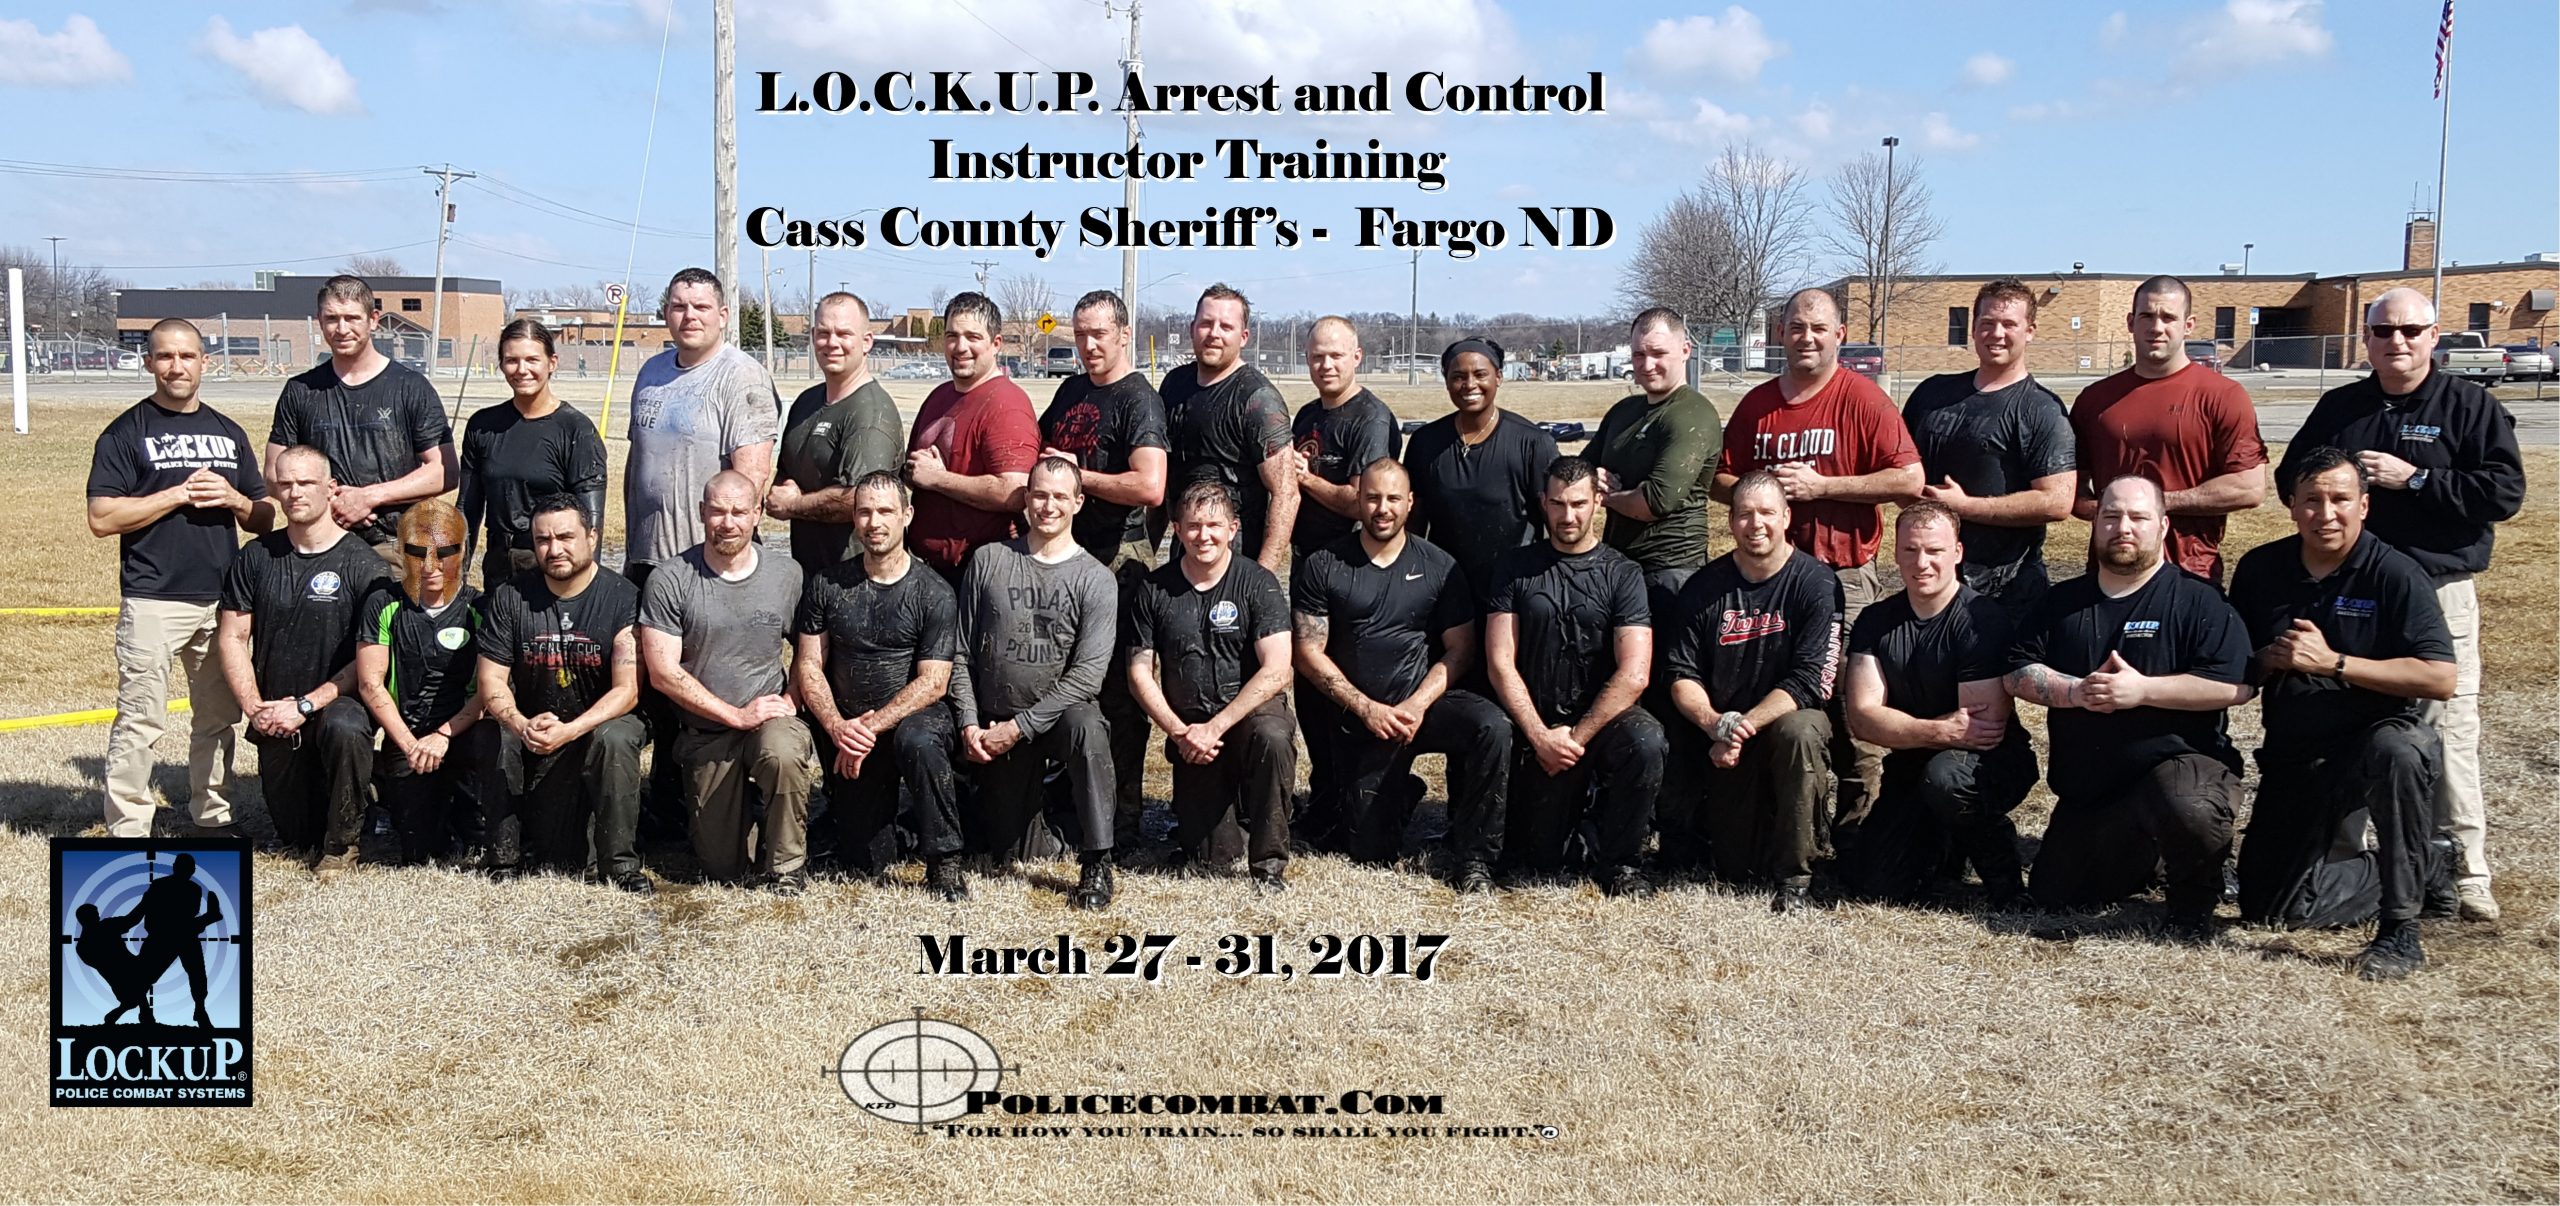 Cass County – Fargo ND L.O.C.K.U.P. ® 5 Day Arrest And Control Instructor Training